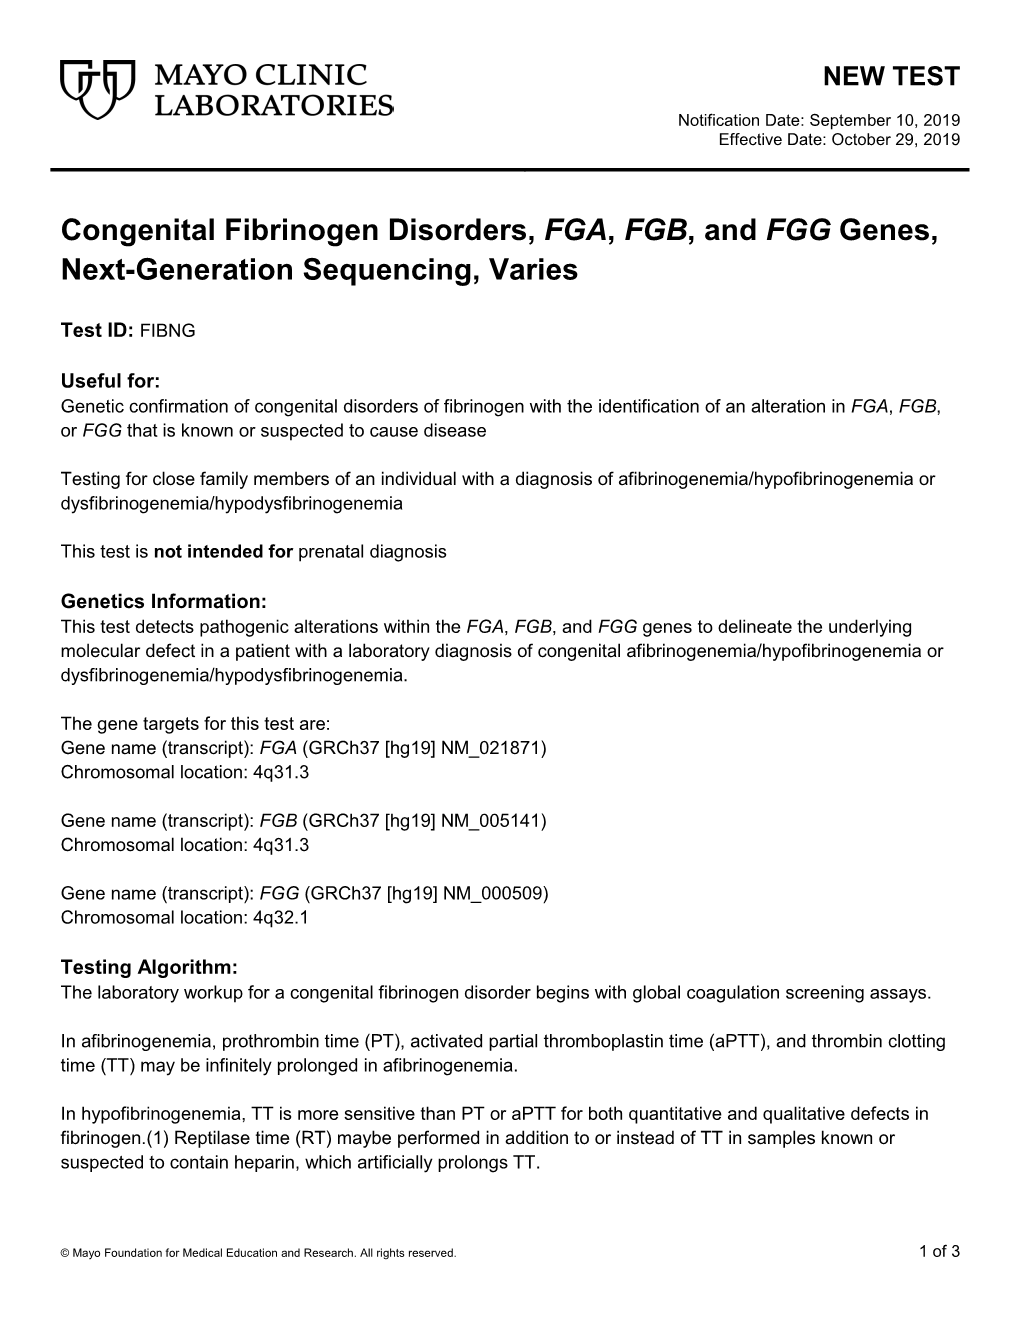 Congenital Fibrinogen Disorders, FGA, FGB, and FGG Genes, Next-Generation Sequencing, Varies